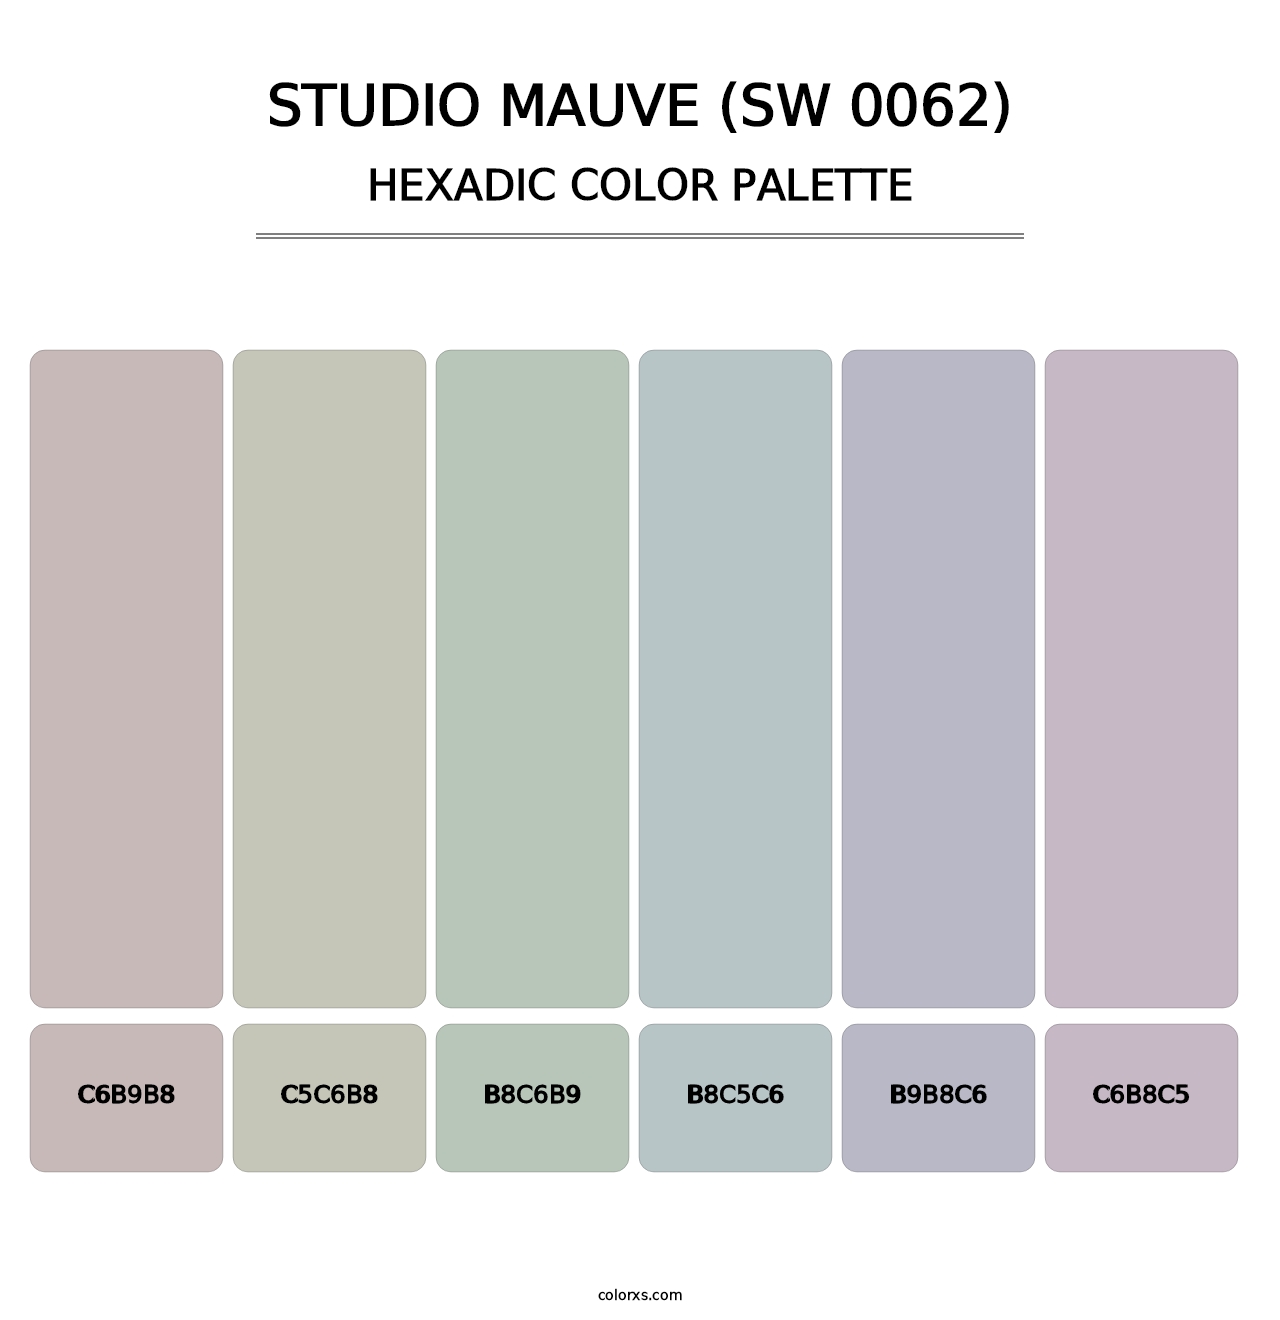 Studio Mauve (SW 0062) - Hexadic Color Palette